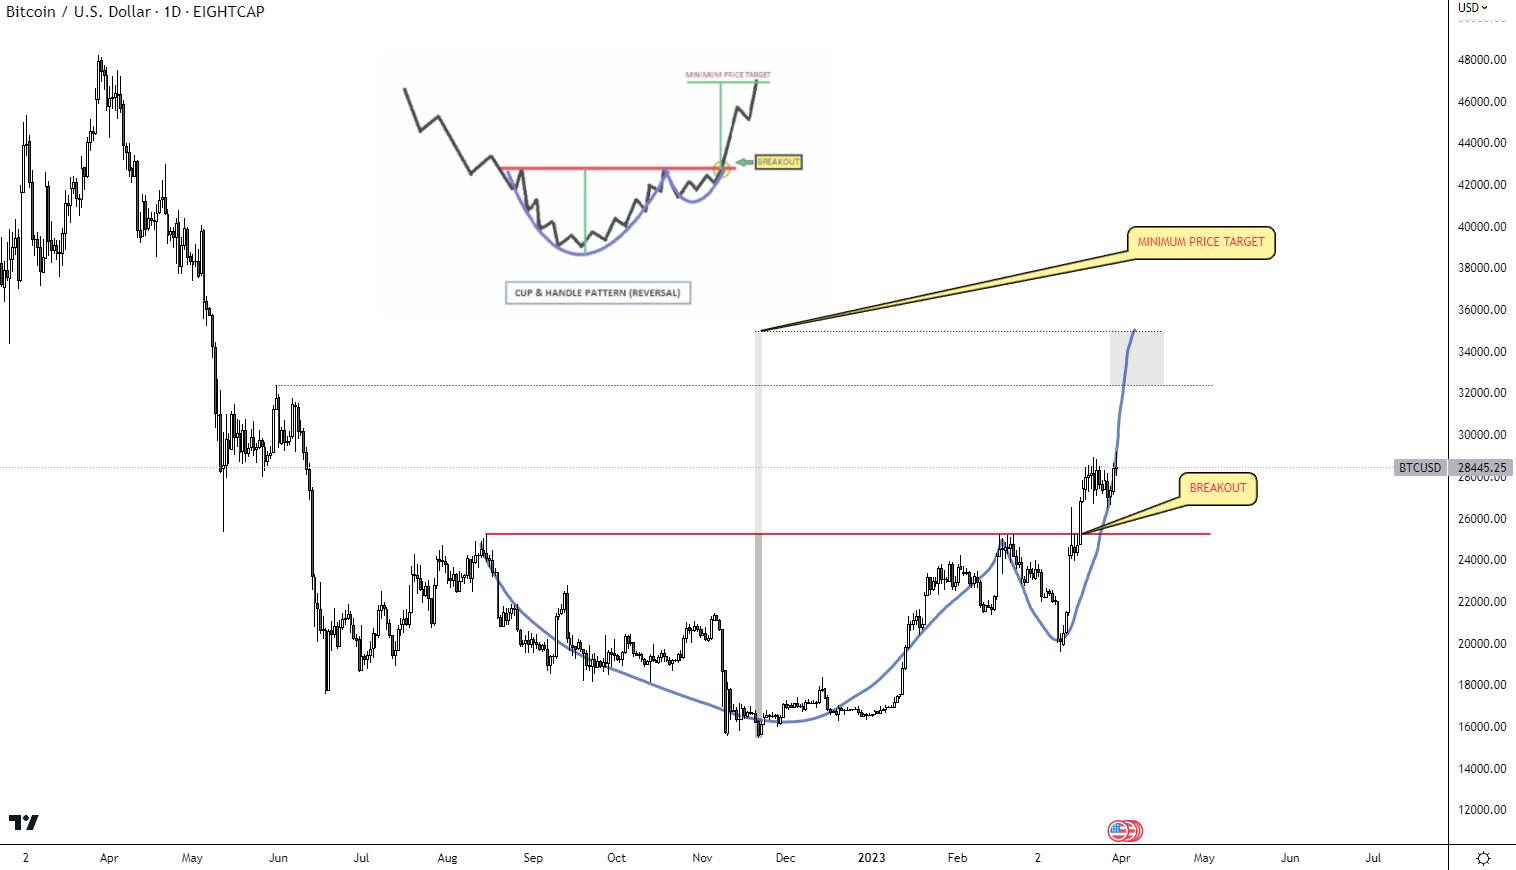 BTC/USD 1D price chart